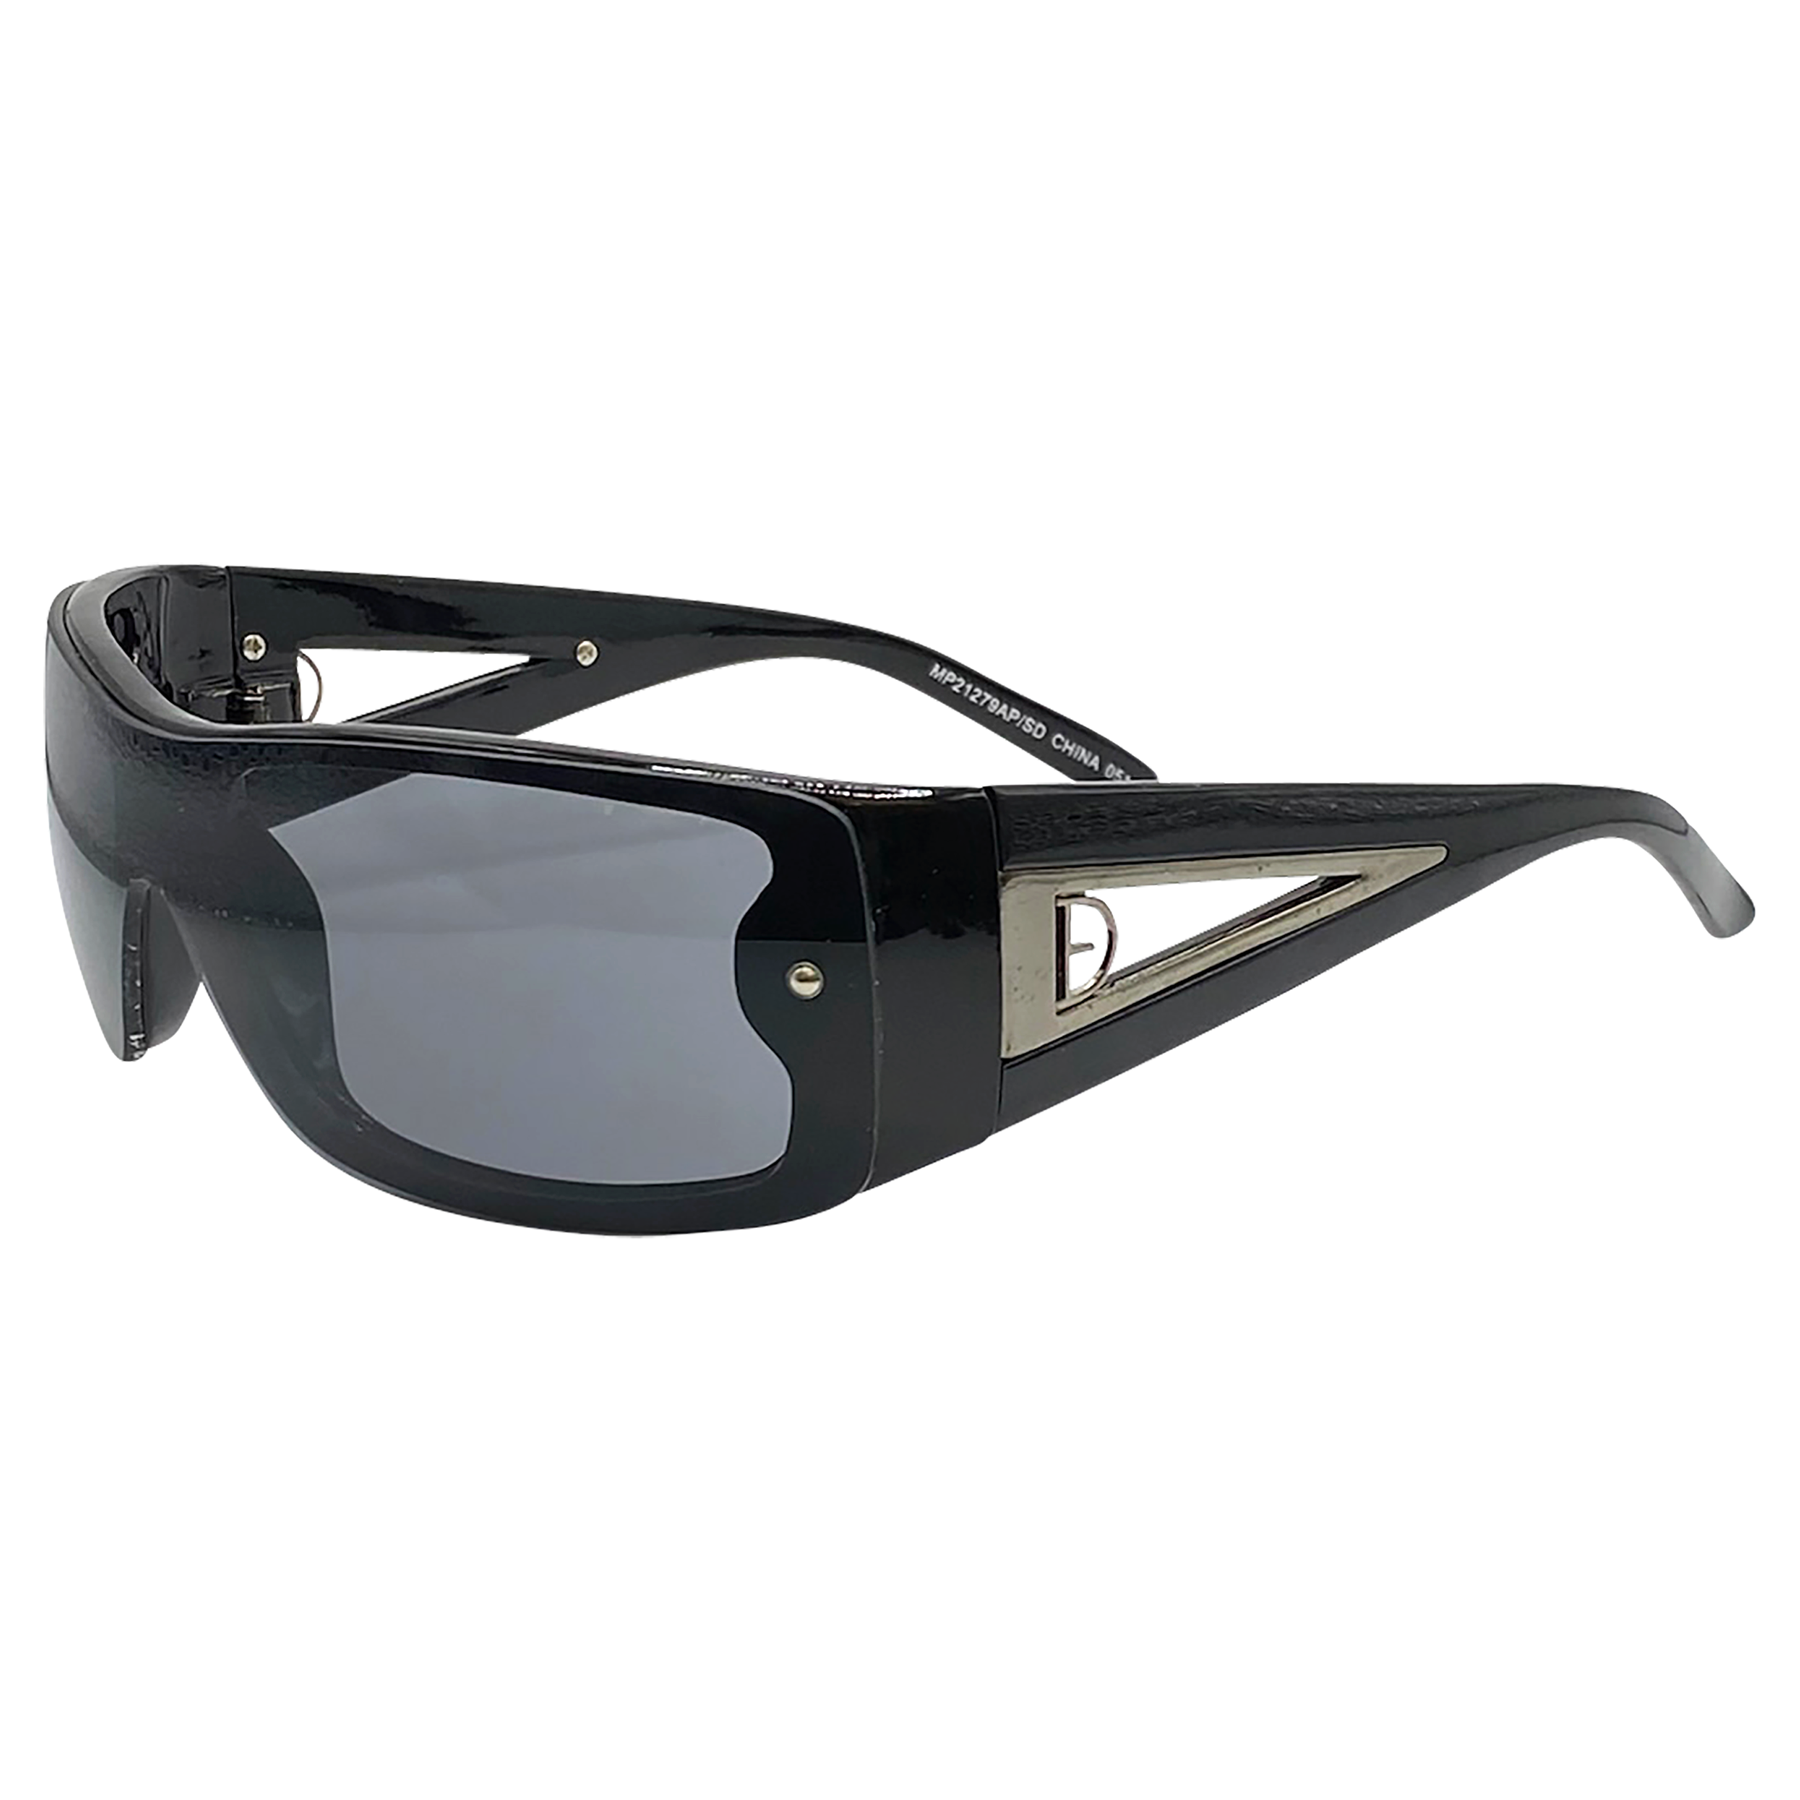 Square Optical Frame Eyeglasses Women Men Fashion Glasses Frames Retro –  Jollynova